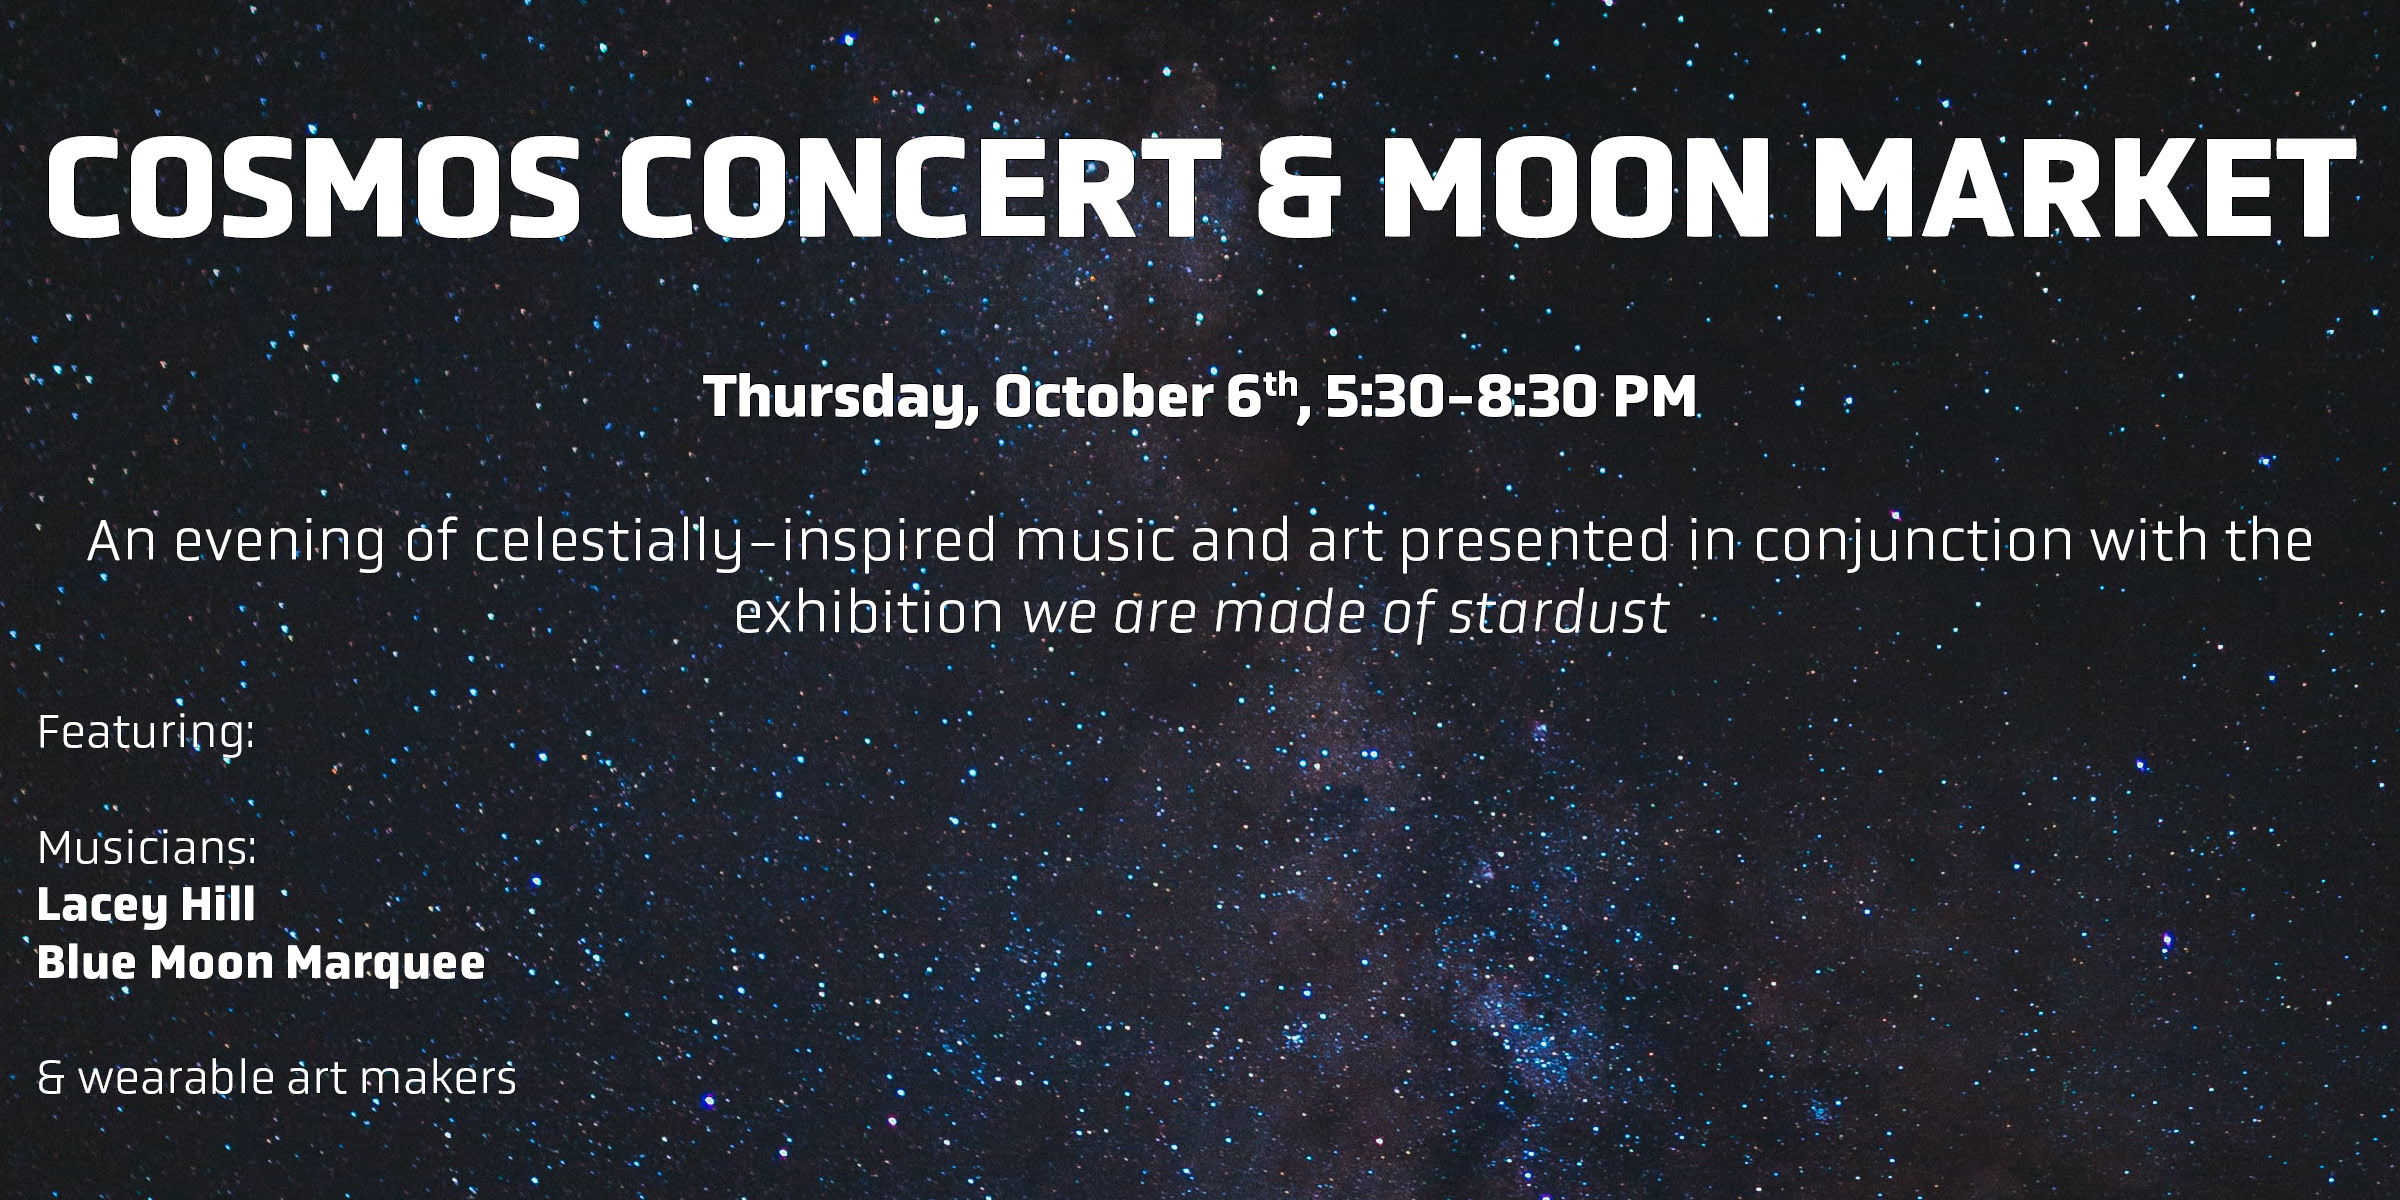 Cosmos concert details